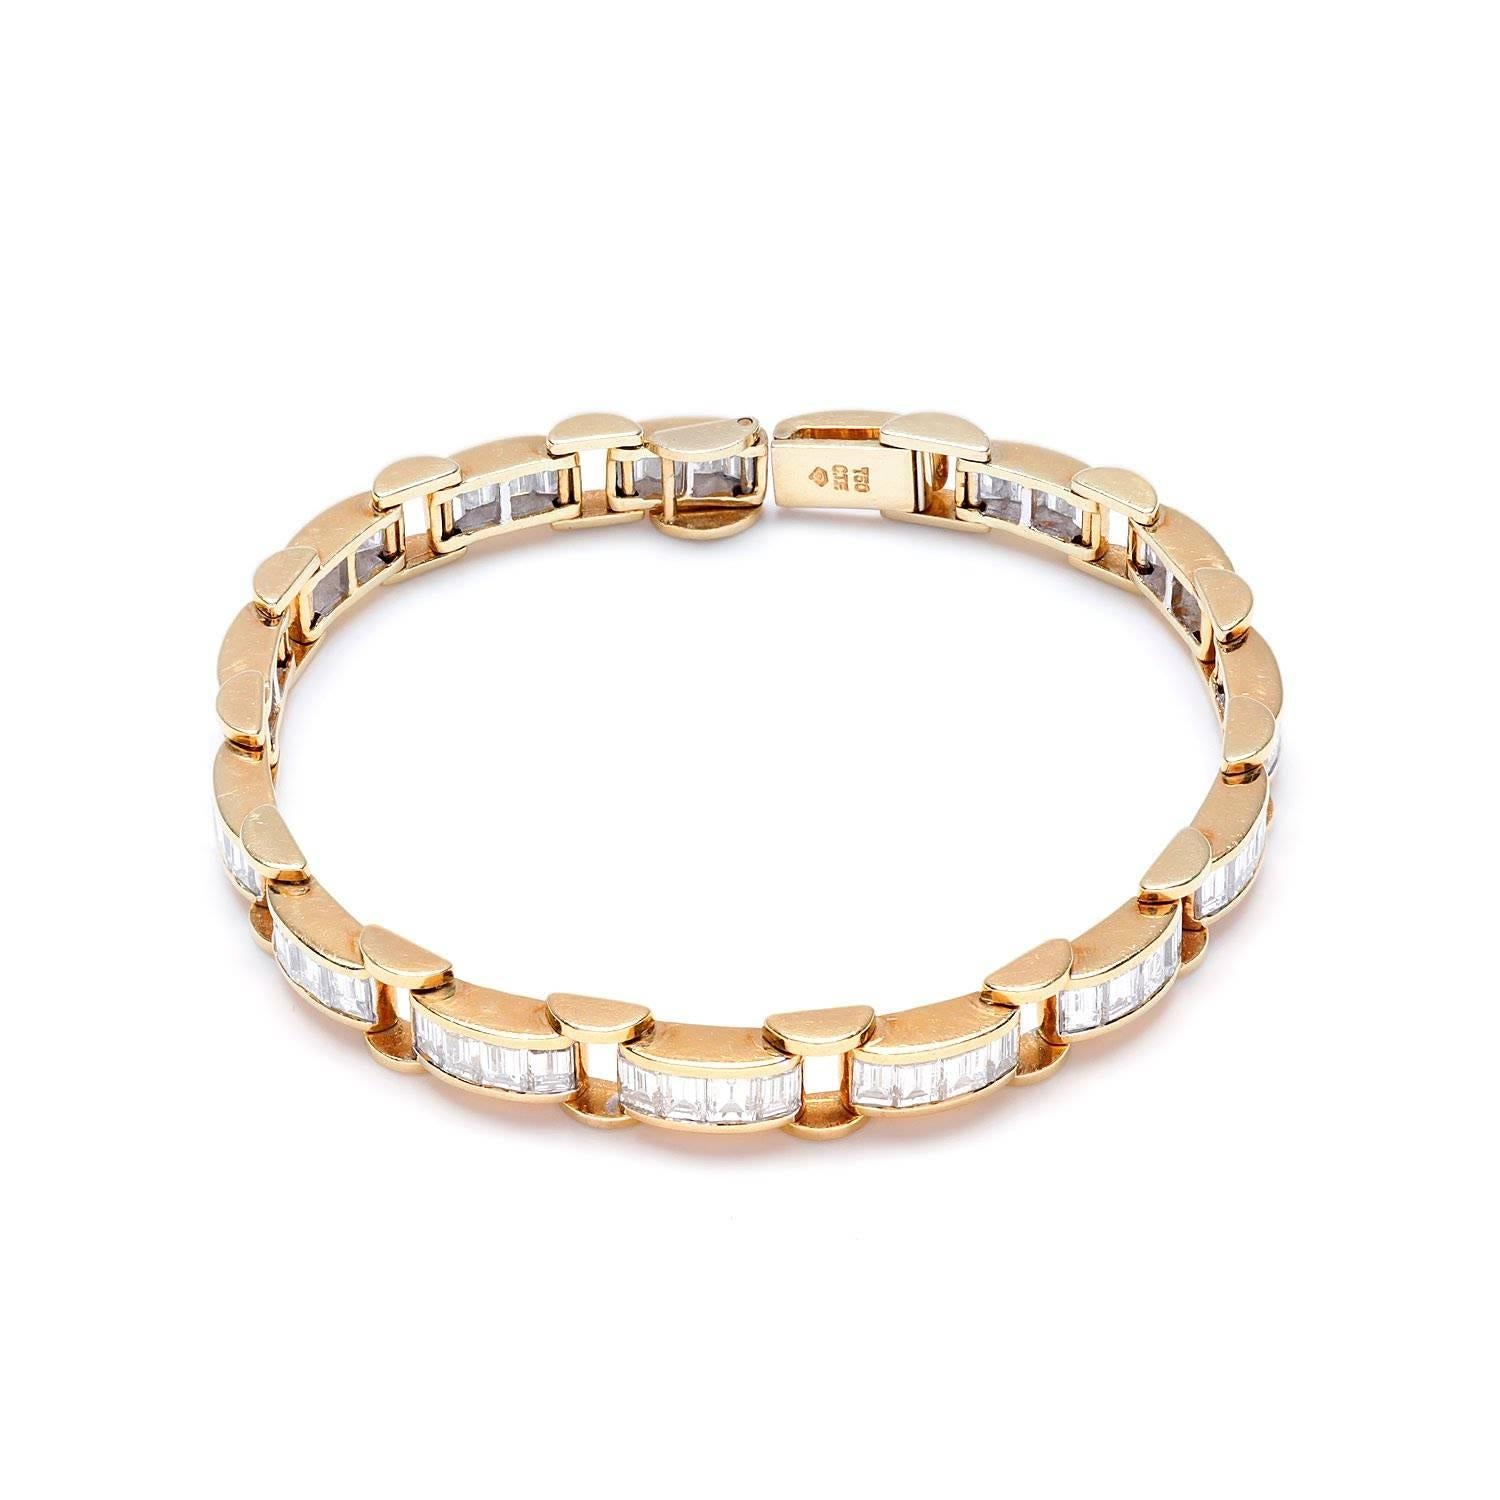 6.85 Carat & 18K Gold, GIA Certified Diamond Bracelet in a Chain Link Style 2